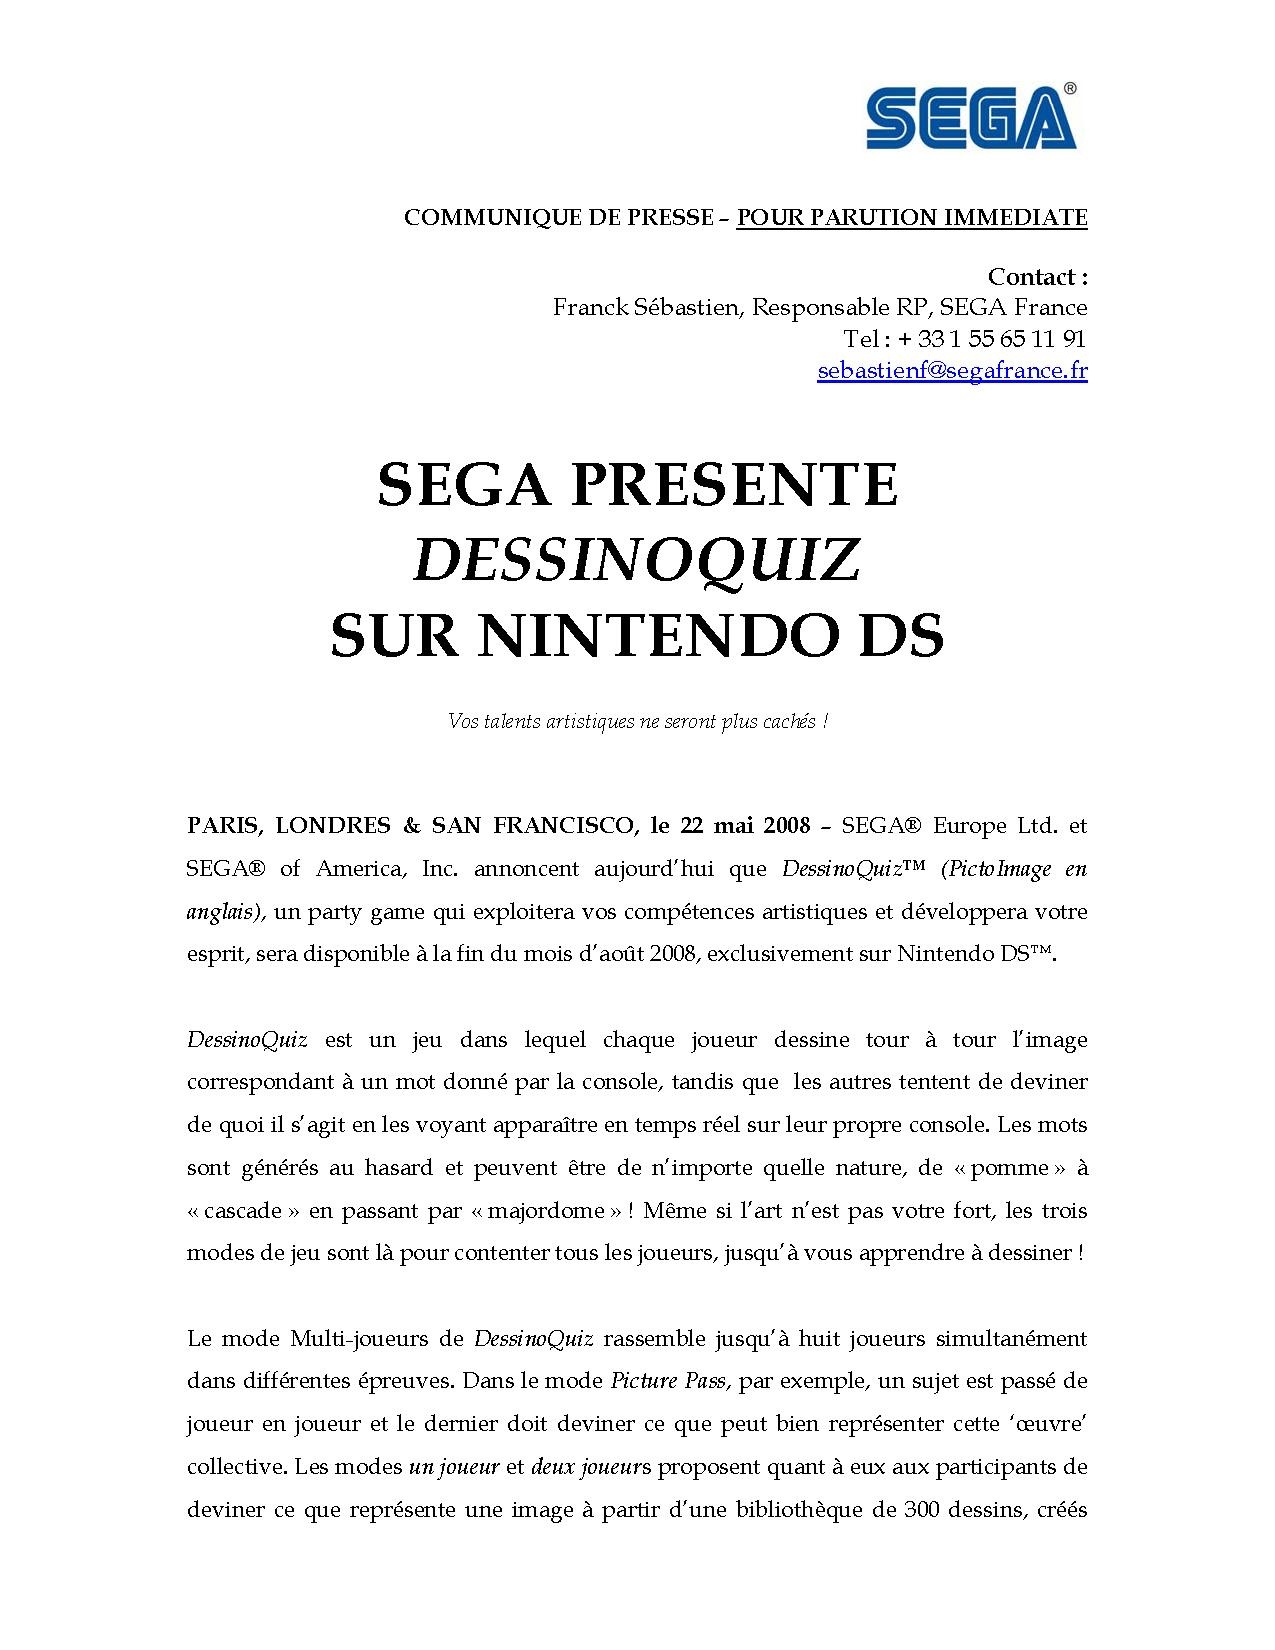 DessinoQuiz SoF PR.pdf